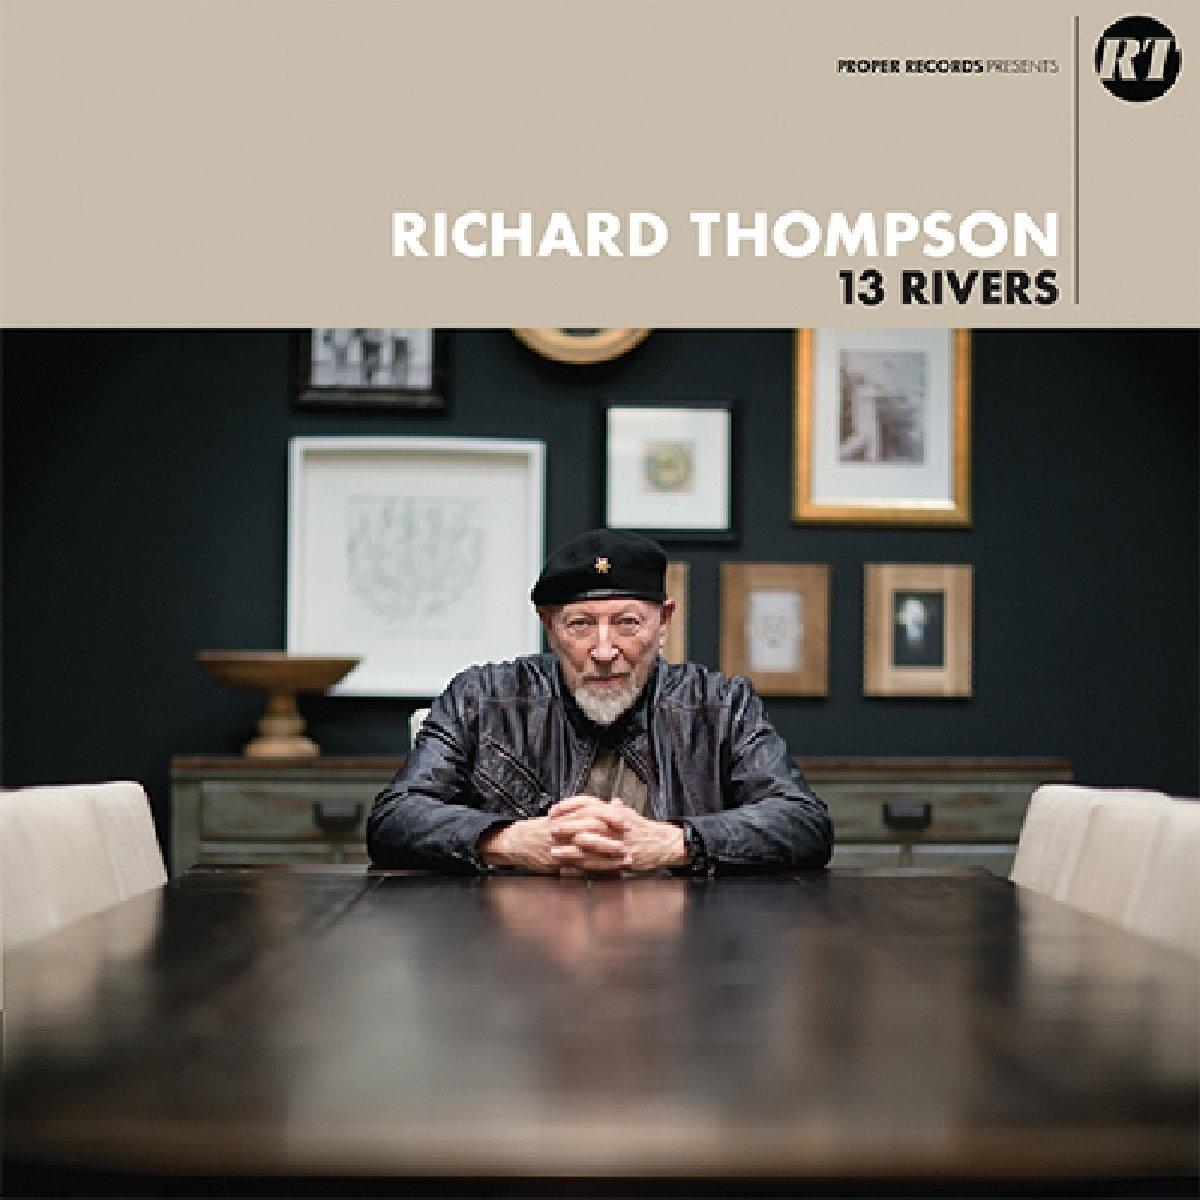 - Rivers - Richard 13 Thompson (CD)